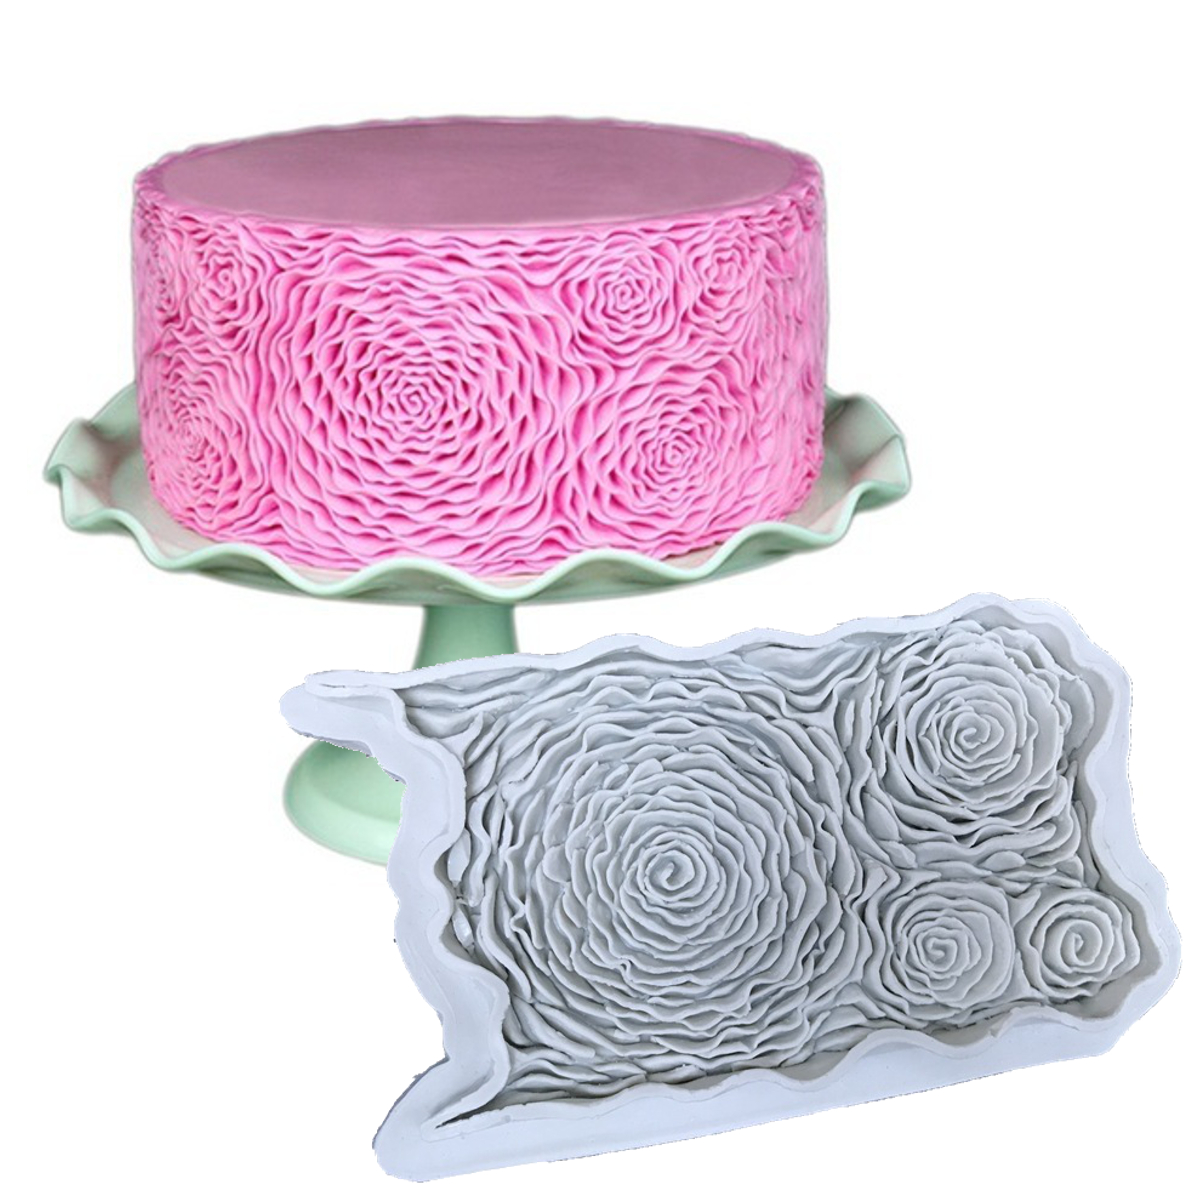 

DIY Cake Silicone Mould Baking Mold Rose Sugar Craft Fondant Mat Decorating